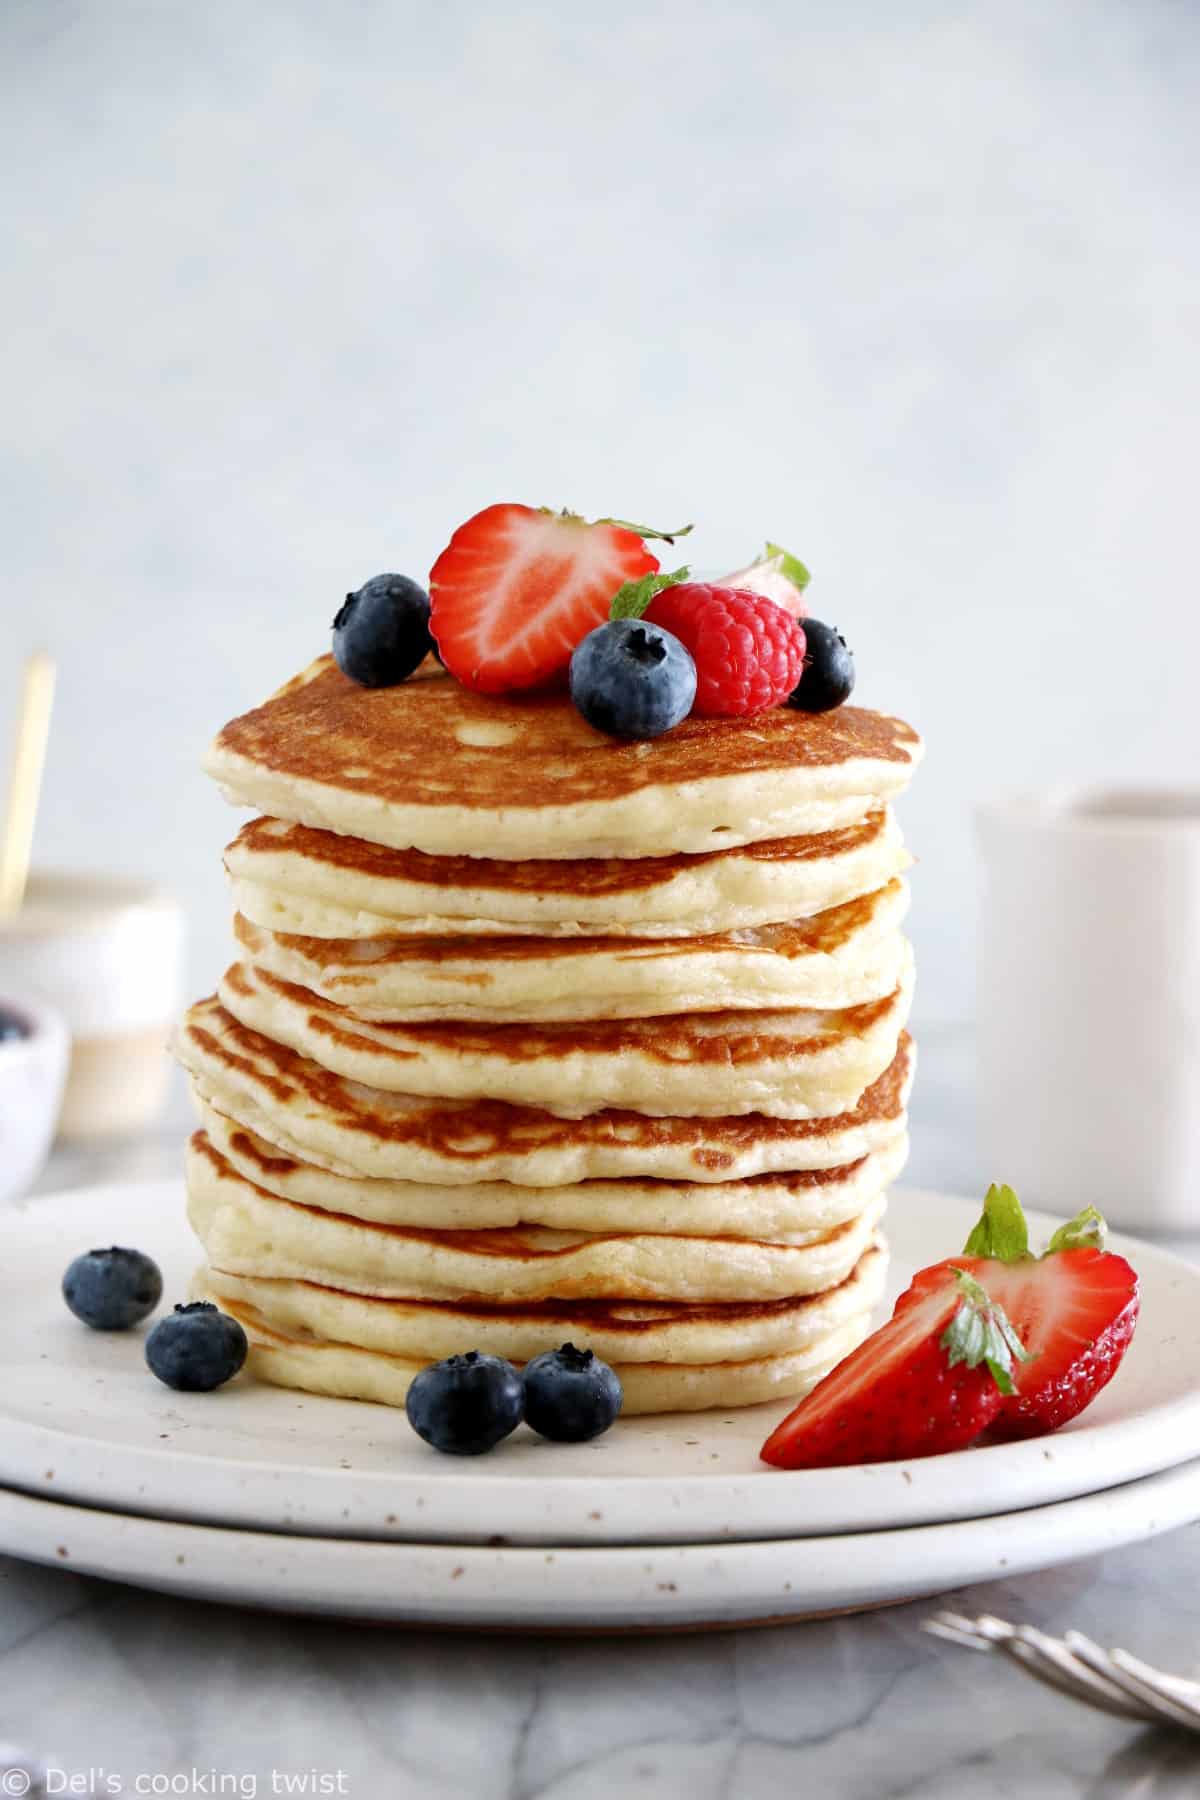 https://www.delscookingtwist.com/wp-content/uploads/2022/01/Easy-Fluffy-American-Pancakes_1.jpg